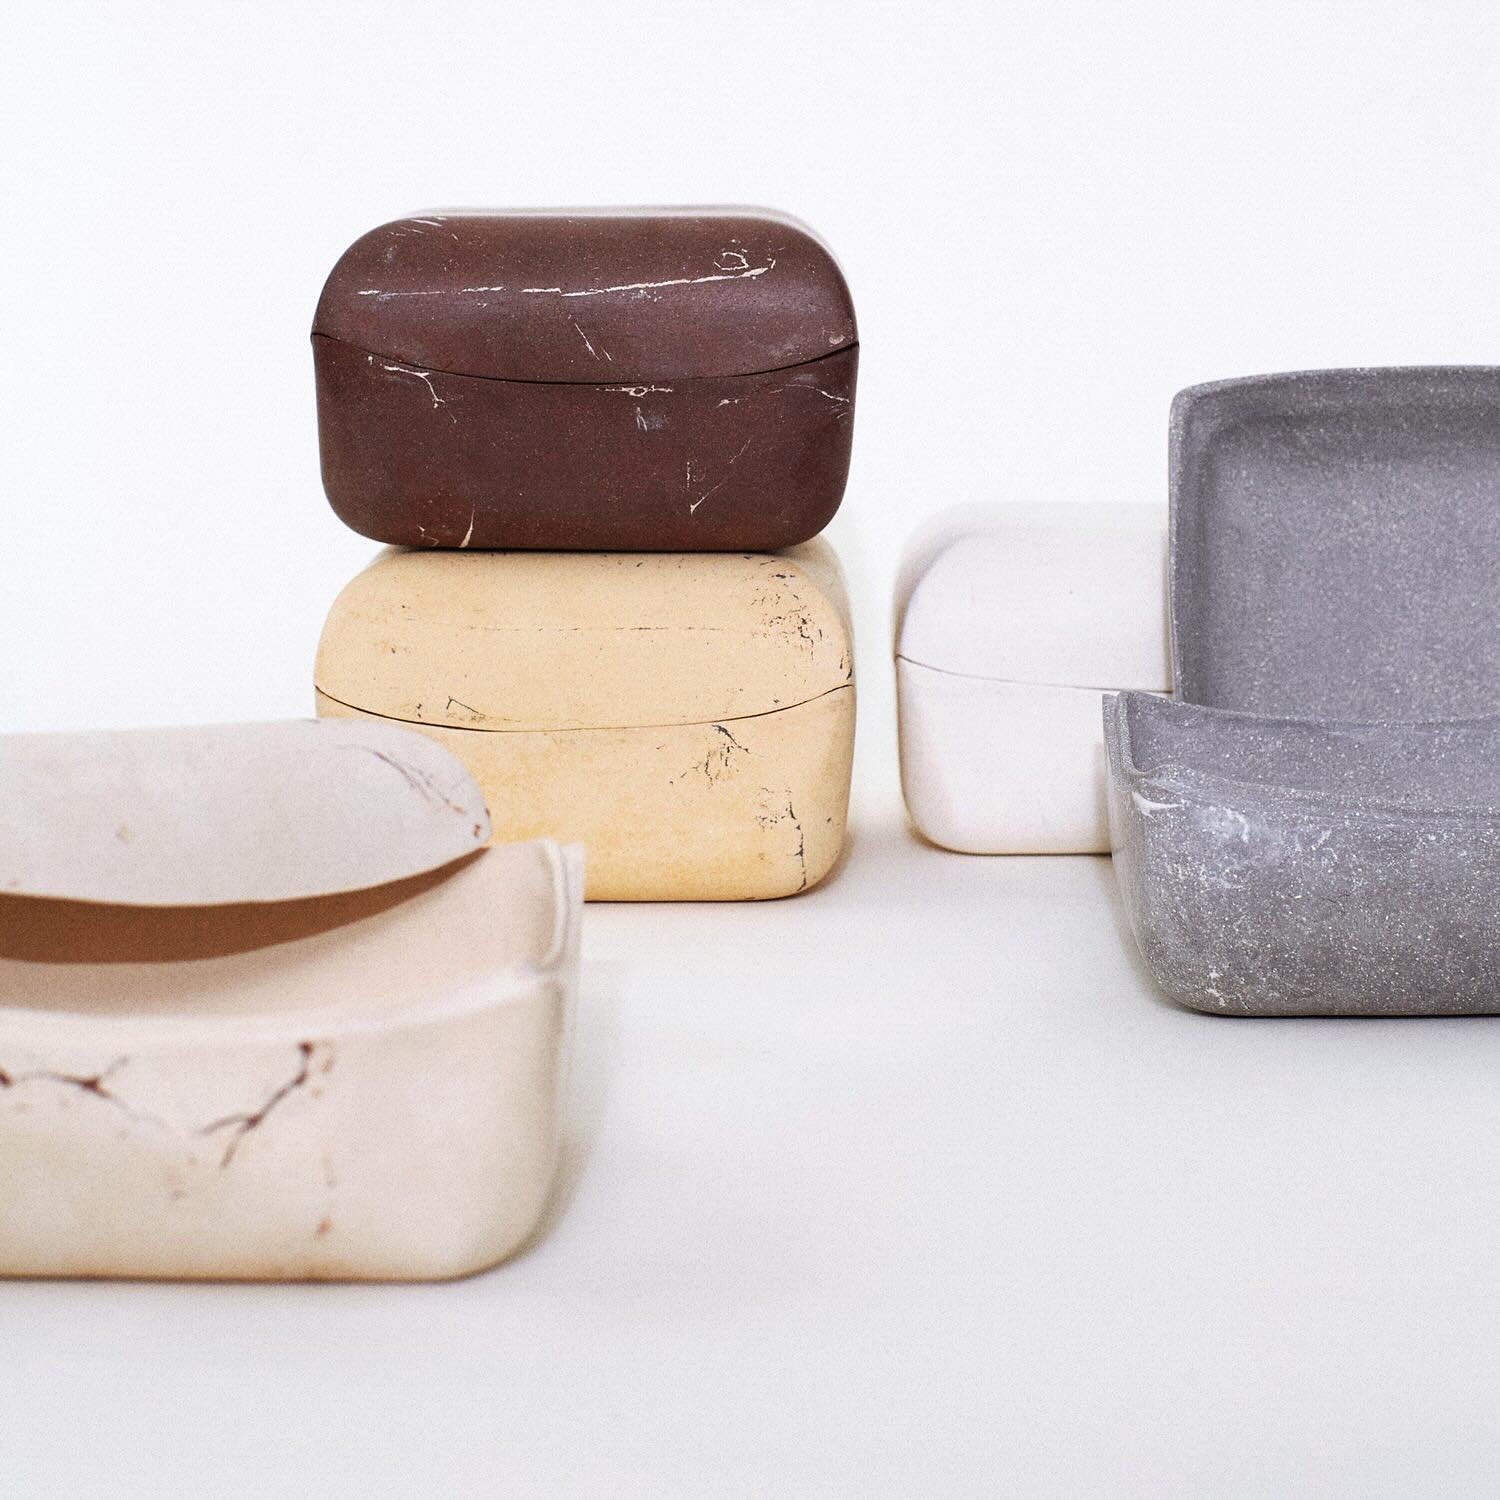 &lsquo;Ceramic Marble Boxes&rsquo; by Erica Tung
Shop now - 12thirteen-store.com
.
.
.
#1213 #12thirteenstore #12thirteen #artisan #artisanmade #homeware #homewaresonline #handmade #ceramicmarbleboxes #new #ceramicboxes #ceramics #design #decor #deco